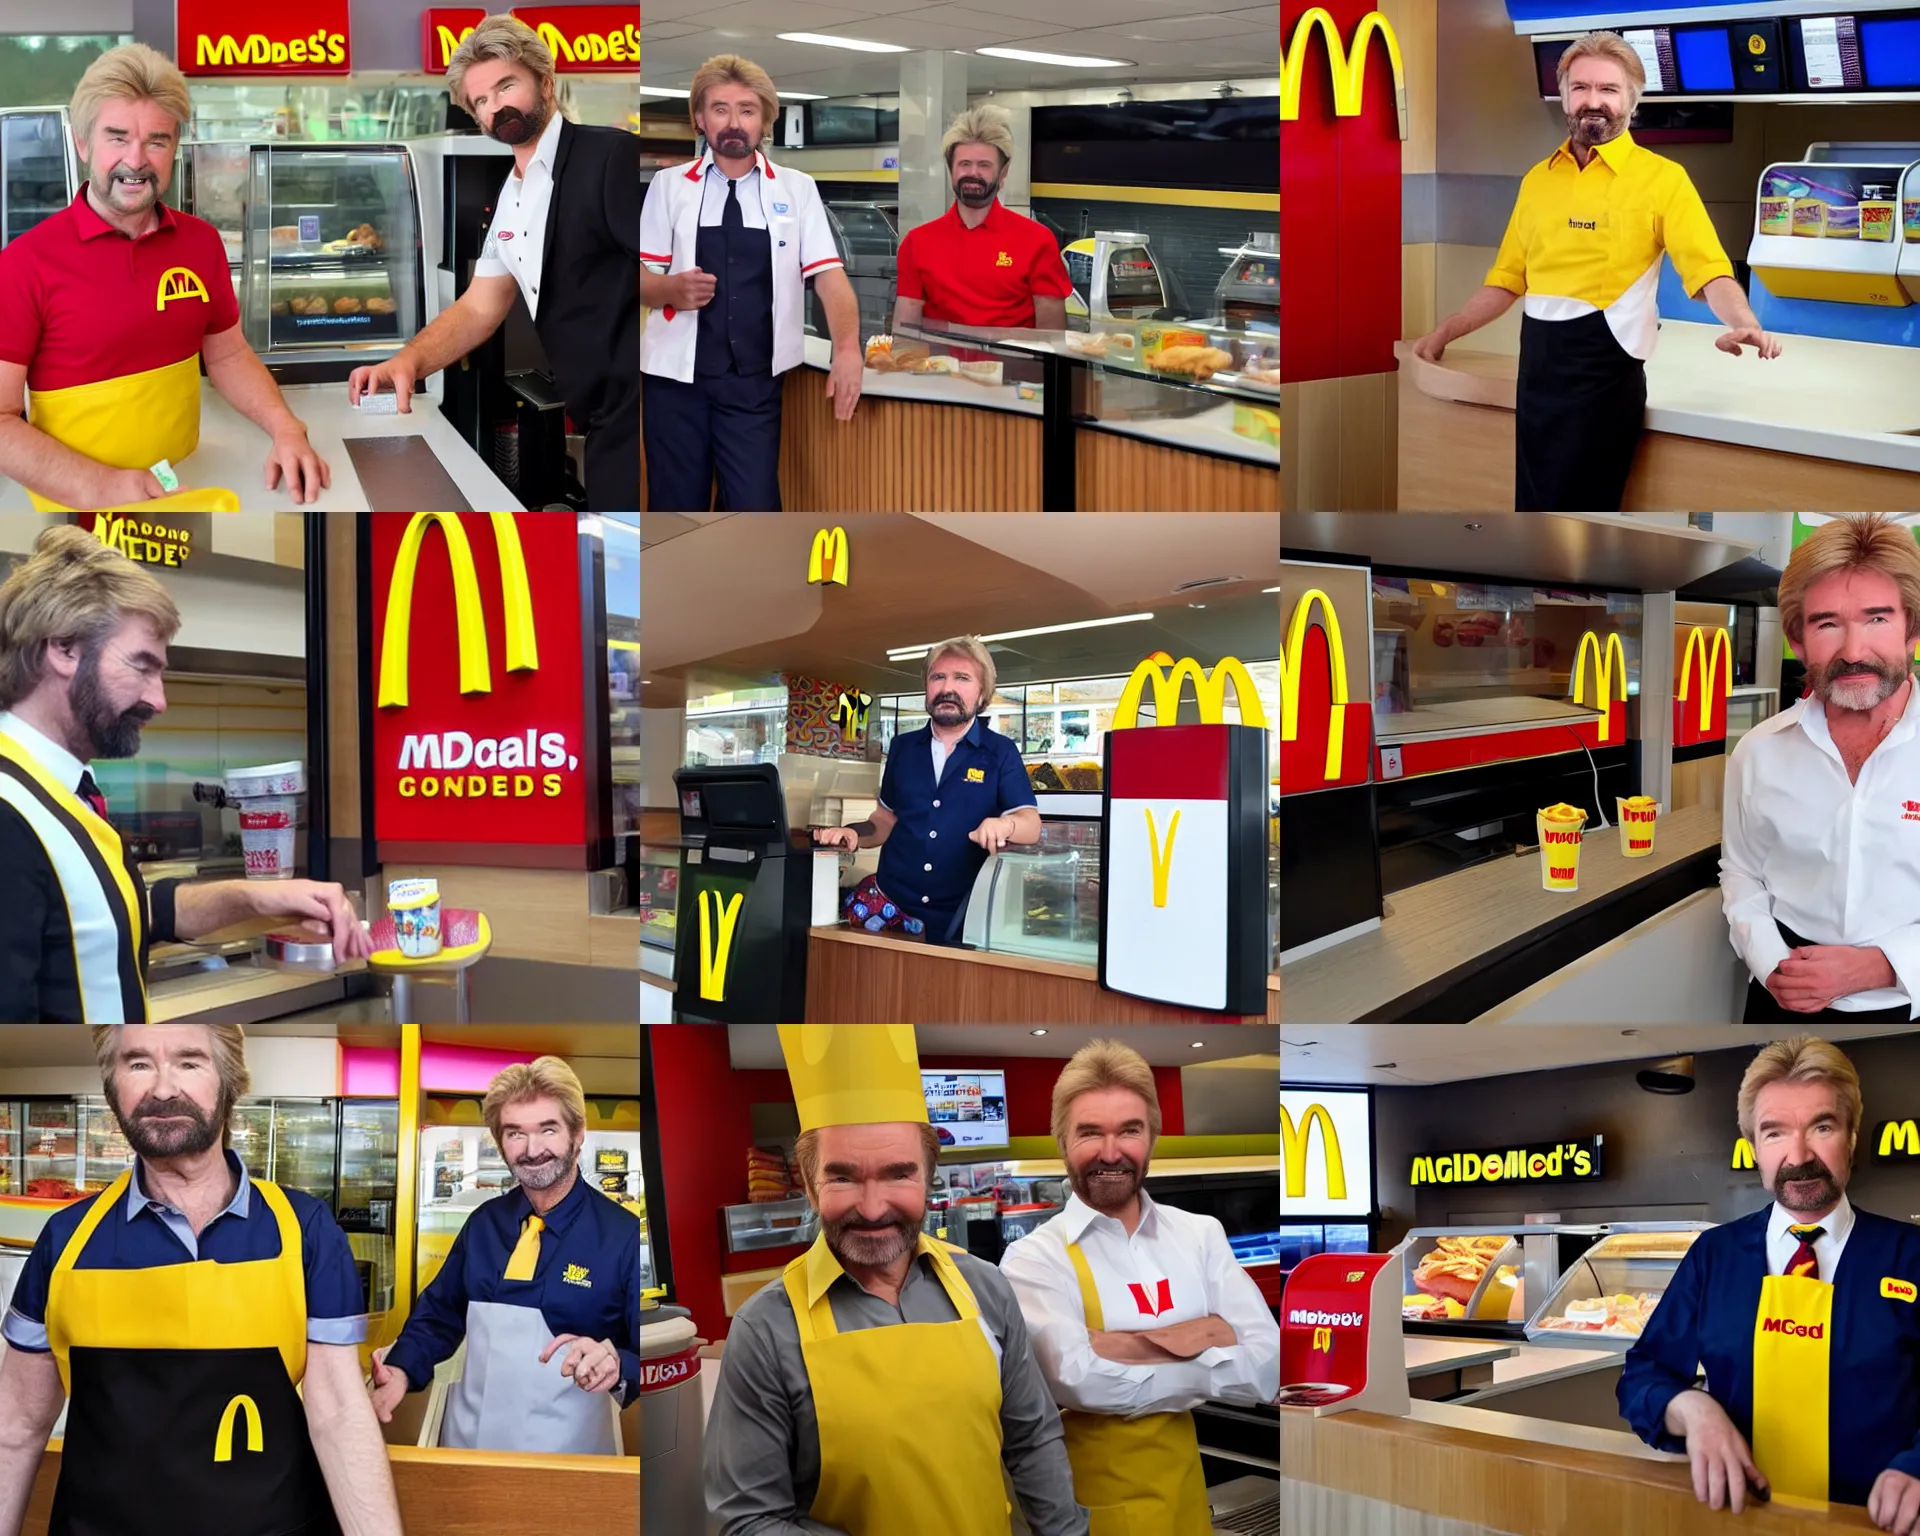 Prompt: noel edmonds wearing mcdonalds uniform, behind the counter at mcdonalds